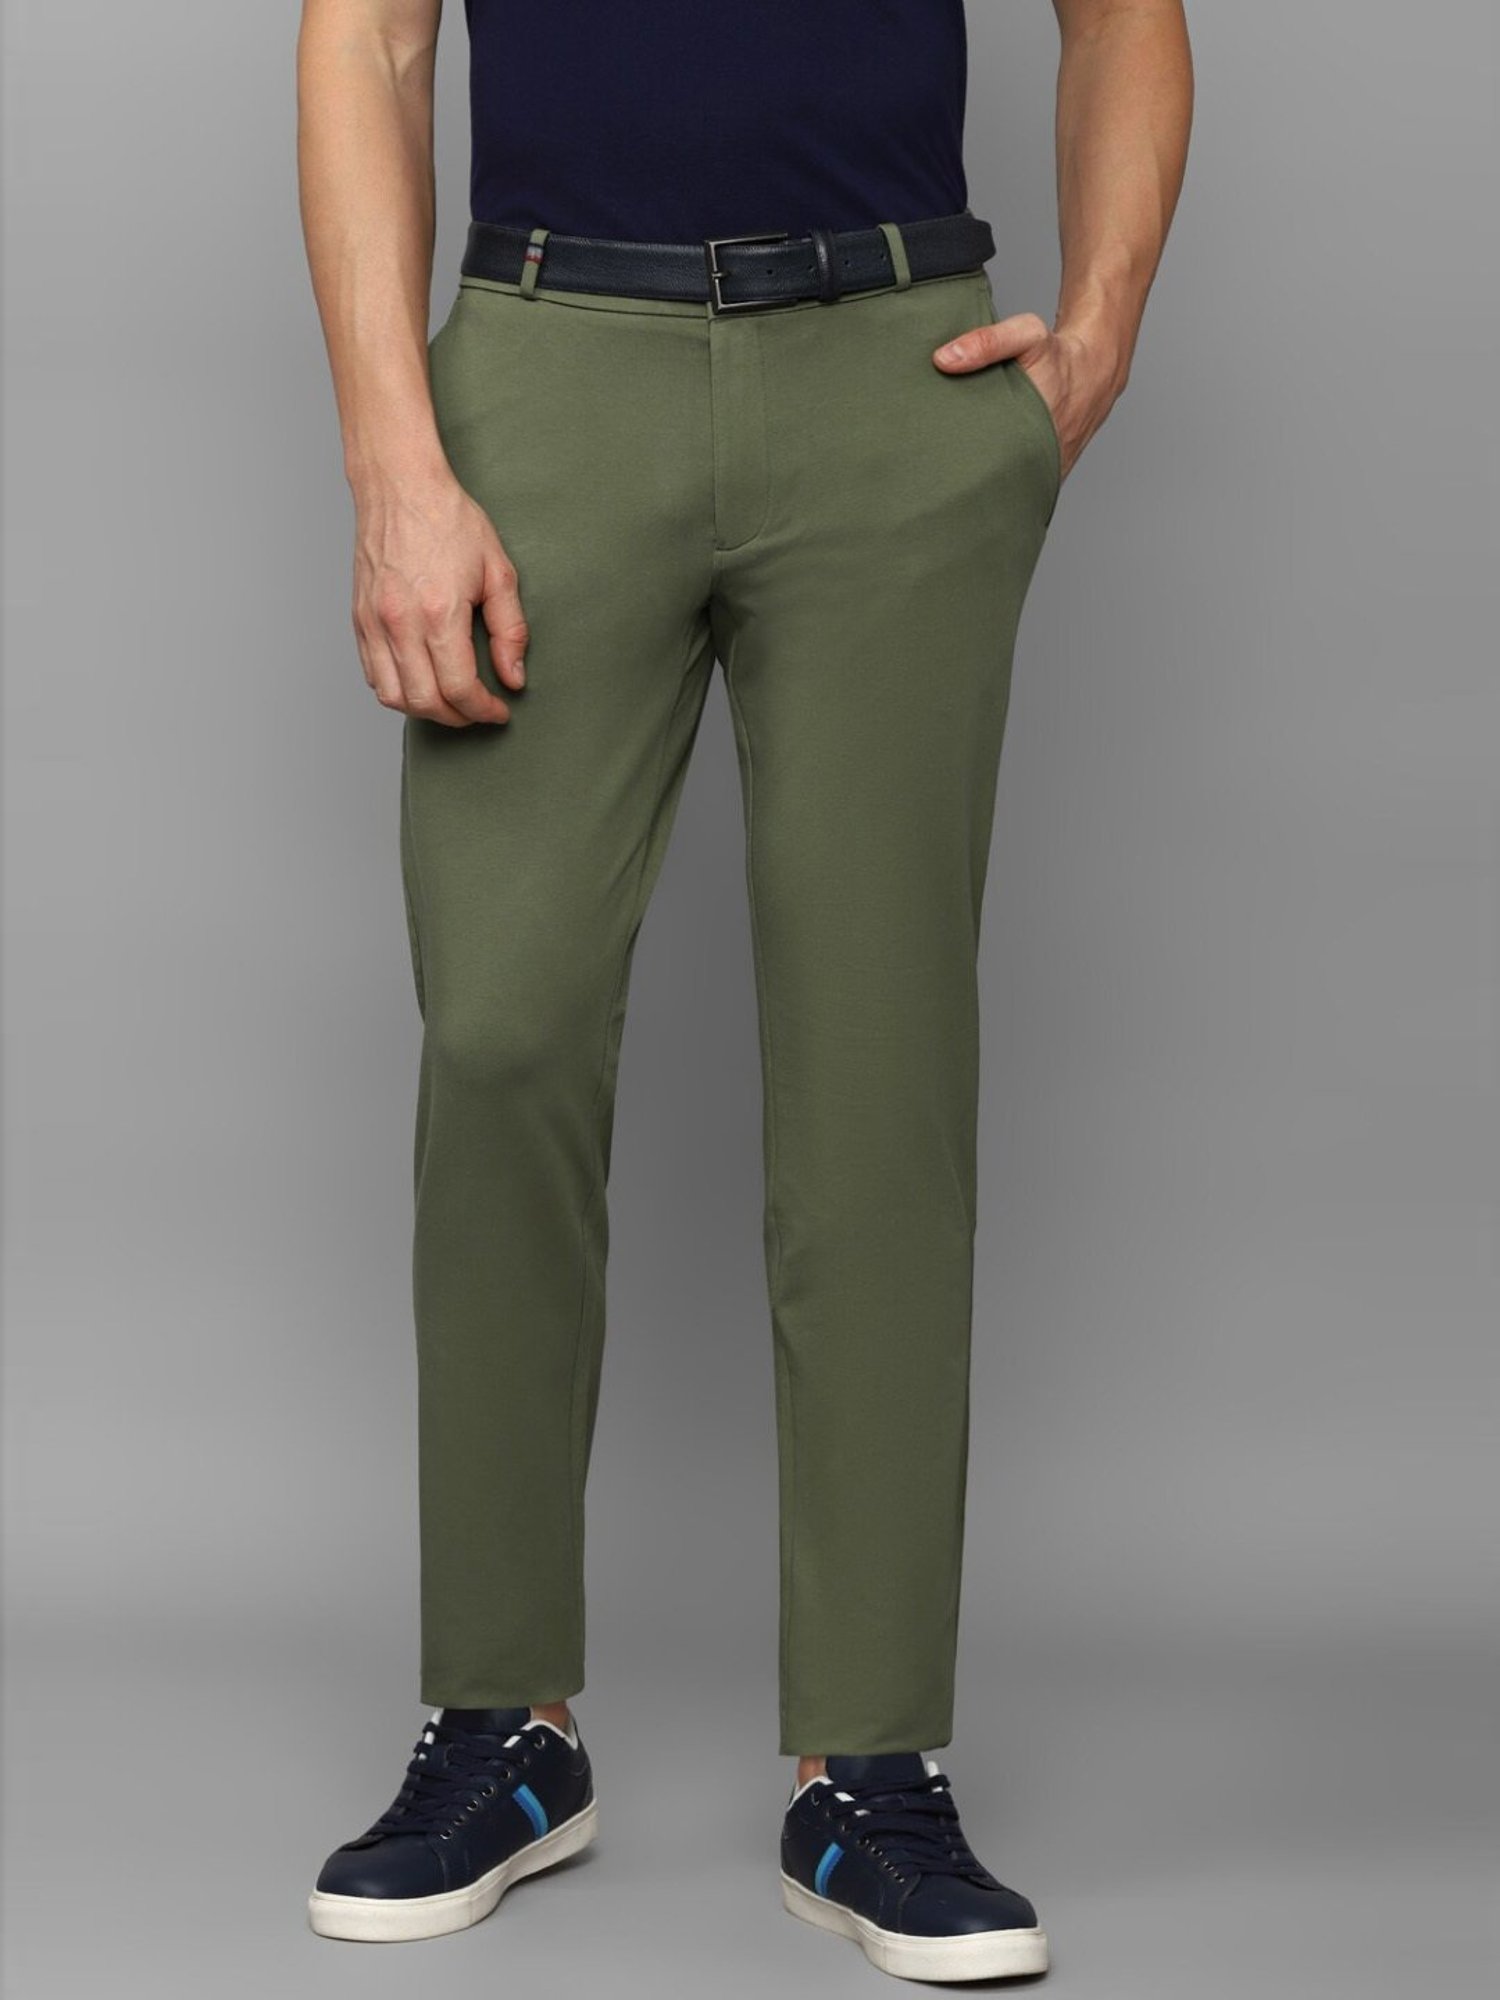 Shop Olive Green Regular Fit Cotton Trousers For Women  सद SAADAA   सद  SAADAA